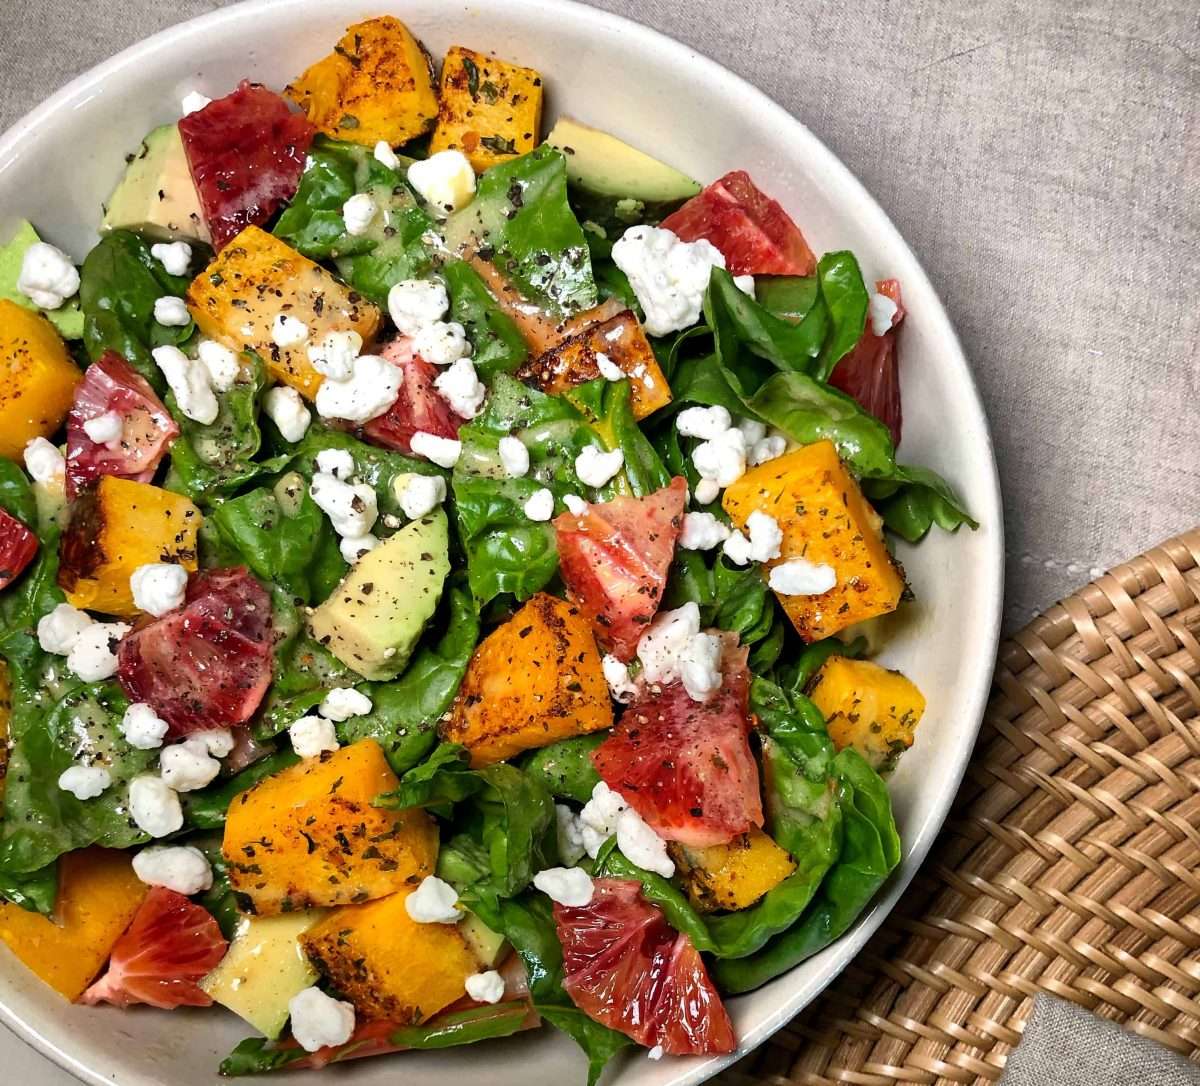 Easy Green Salad Recipe With Blood Orange Vinaigrette